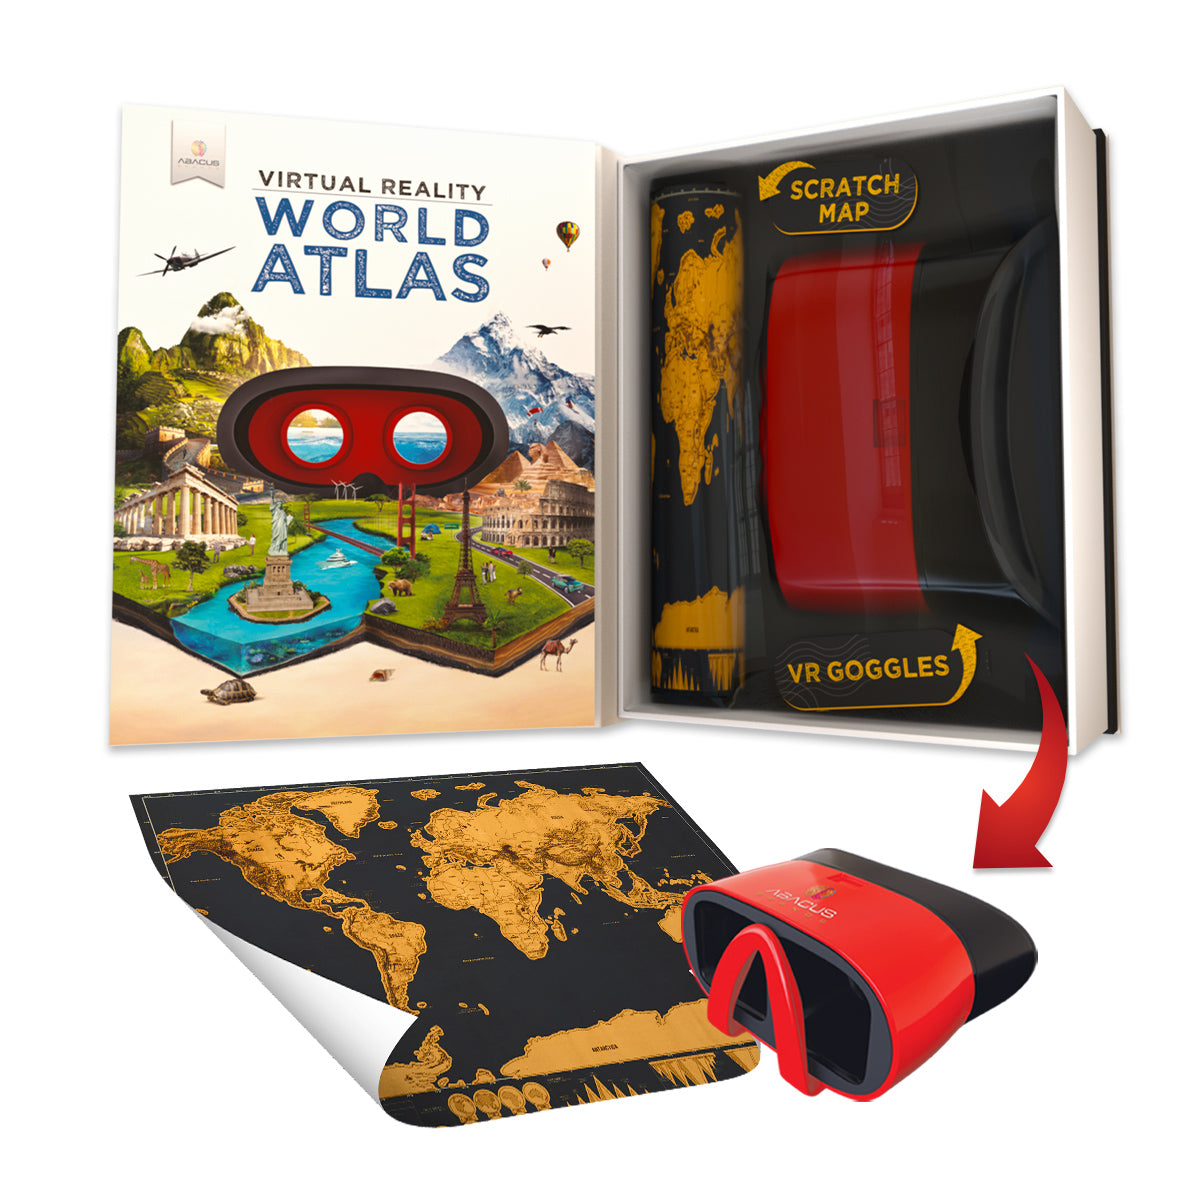 Deluxe Virtual Reality Gift Set - World Atlas!